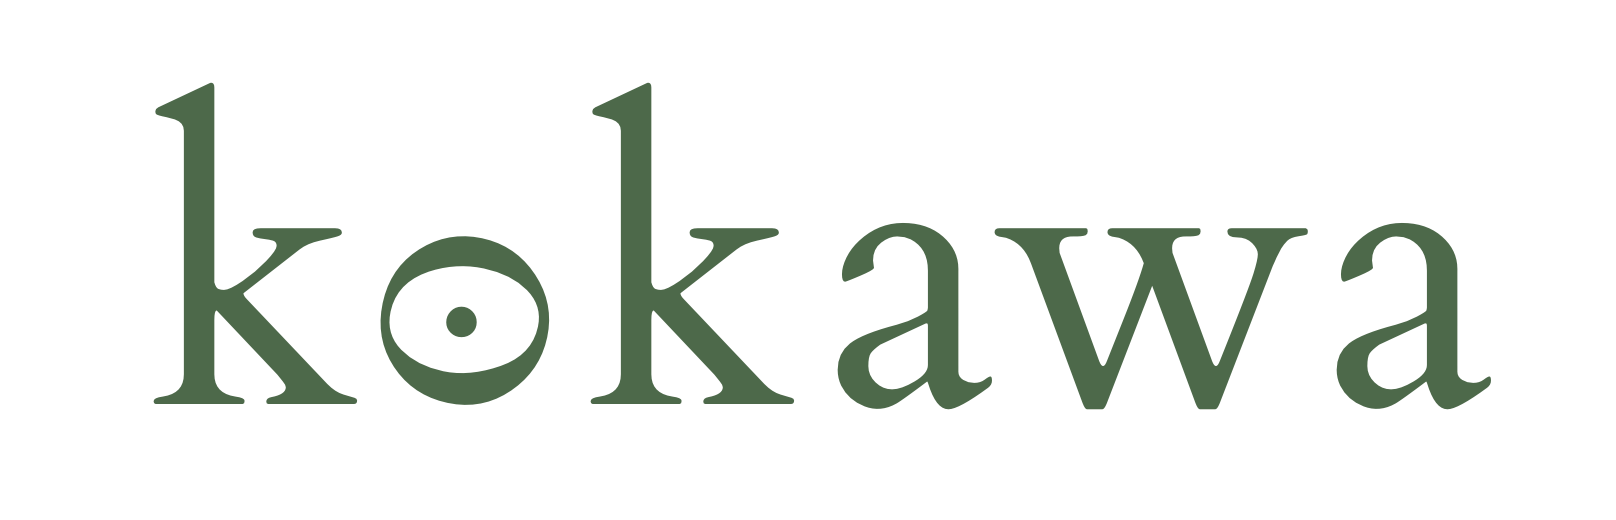 kokawa - Des produits sains et bio